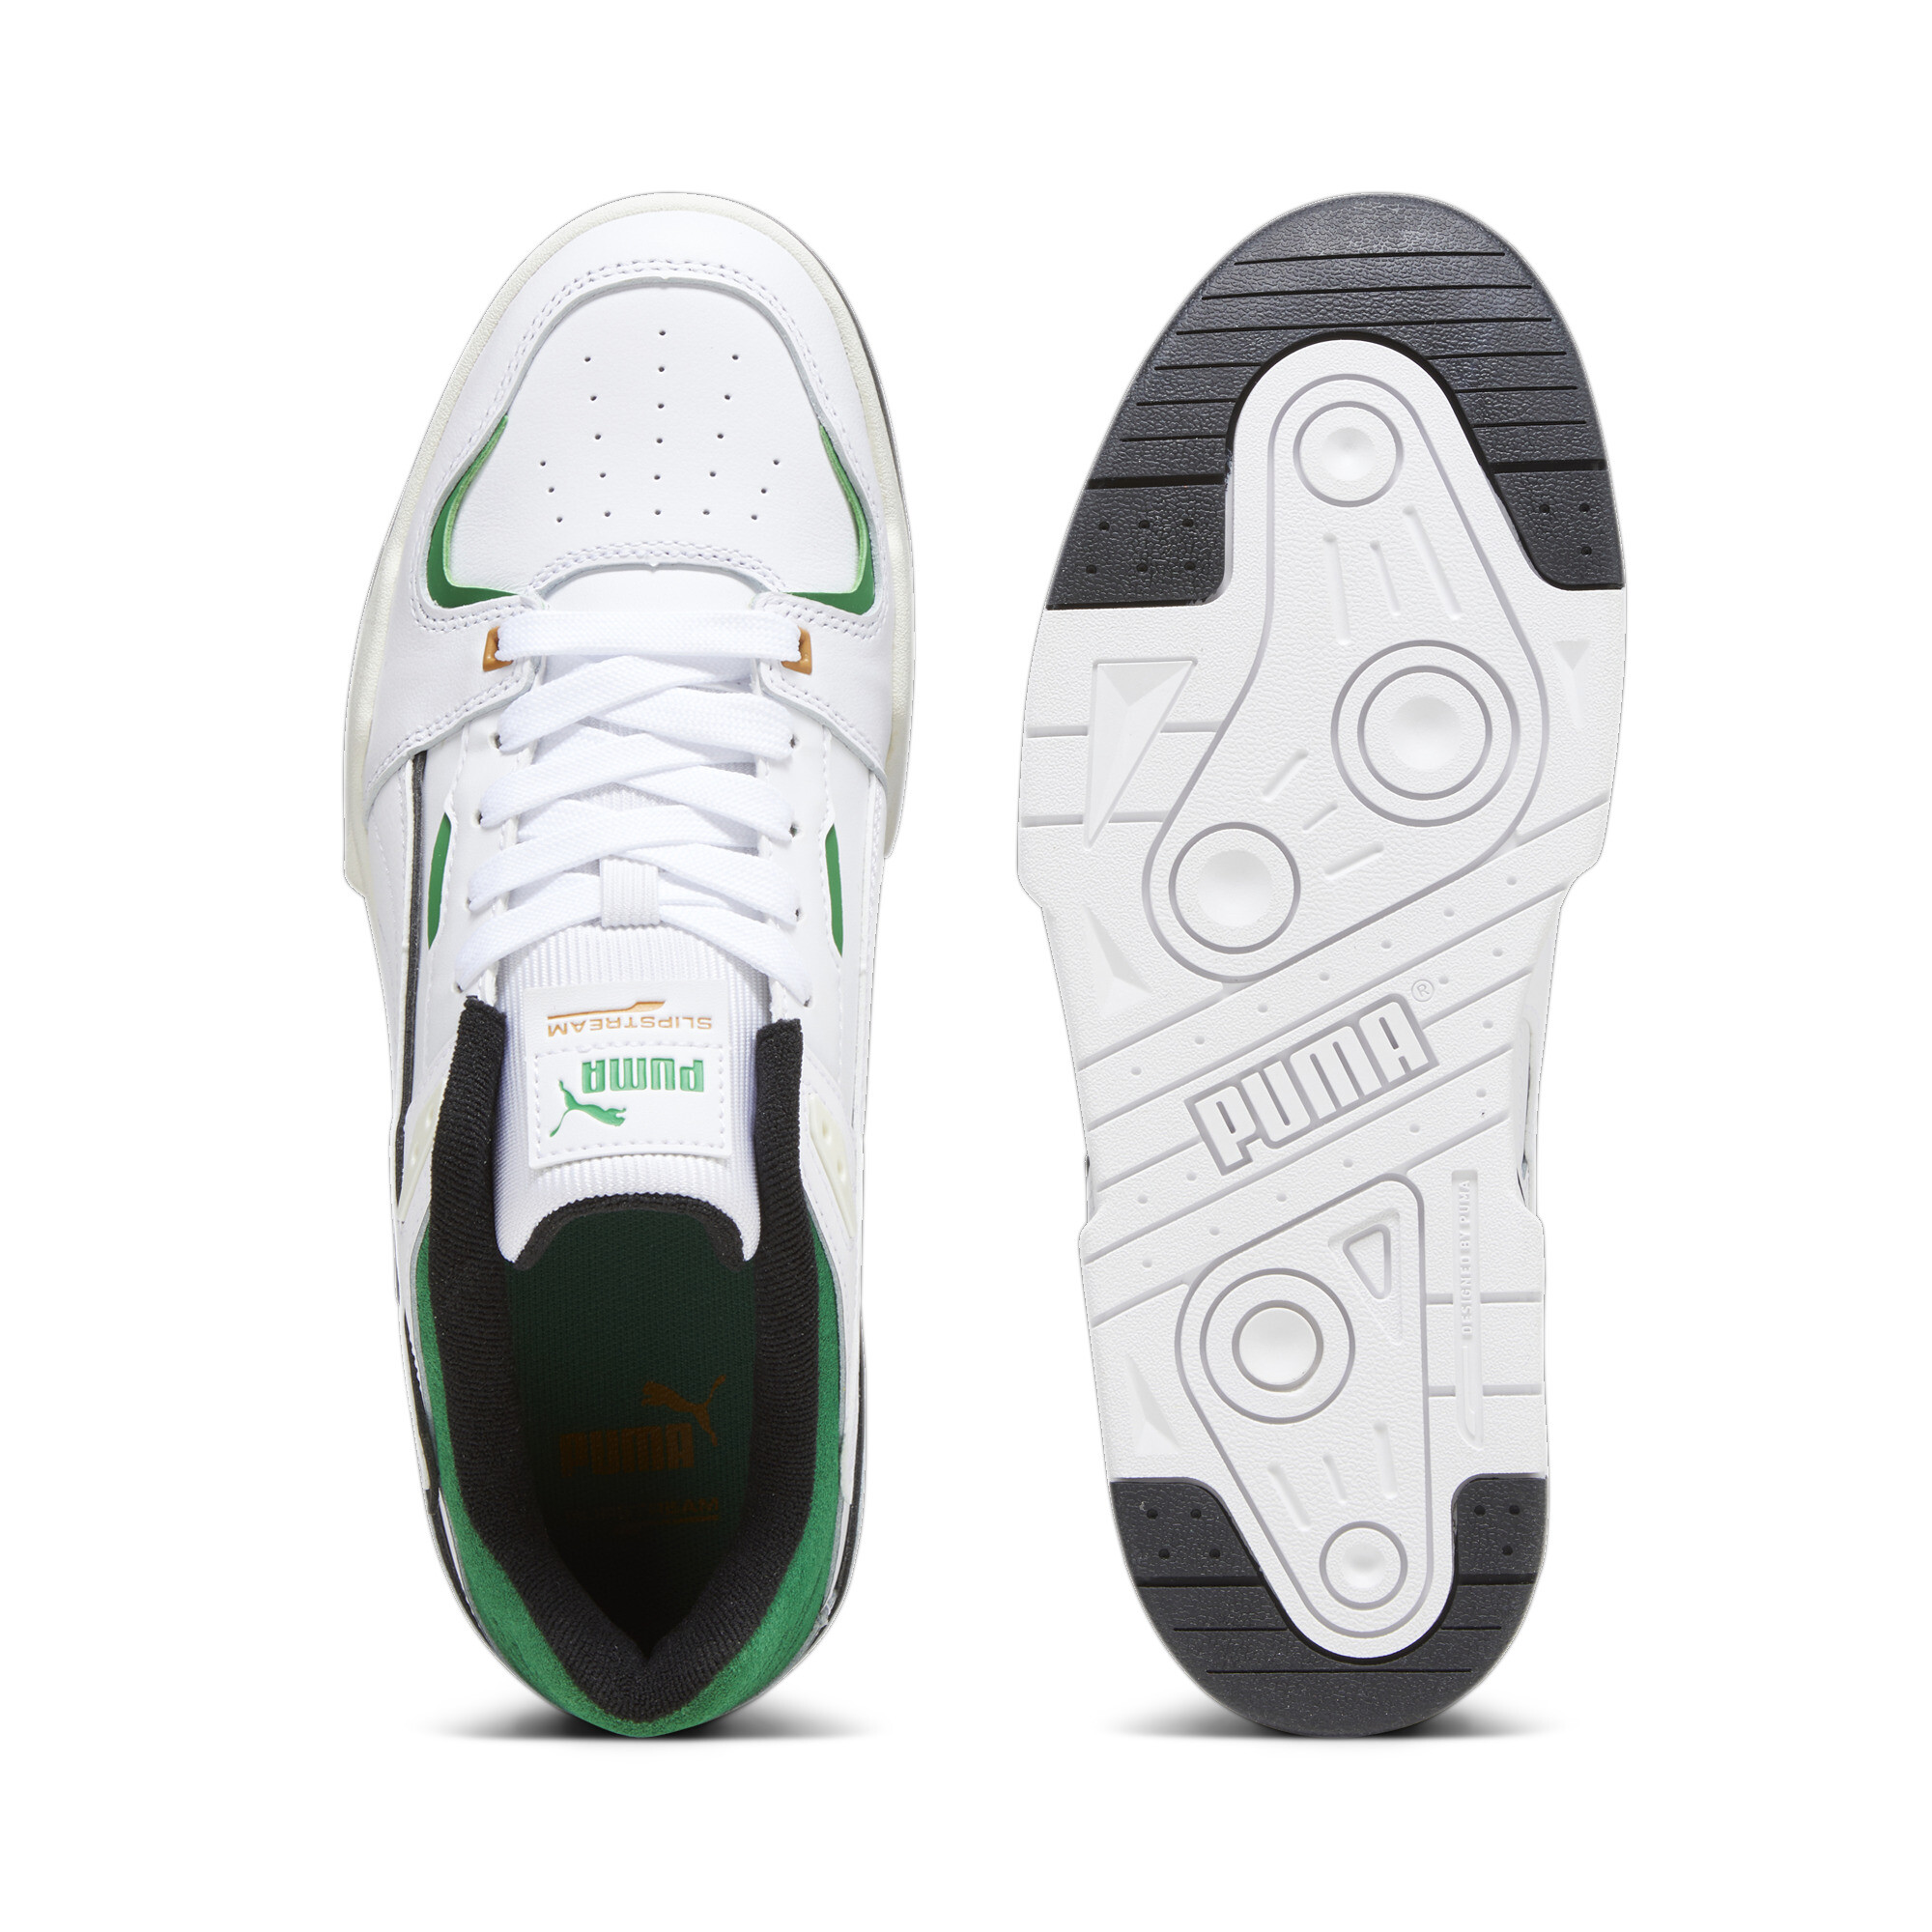 Men's PUMA Slipstream Bball Sneakers In 20 - White, Size EU 41